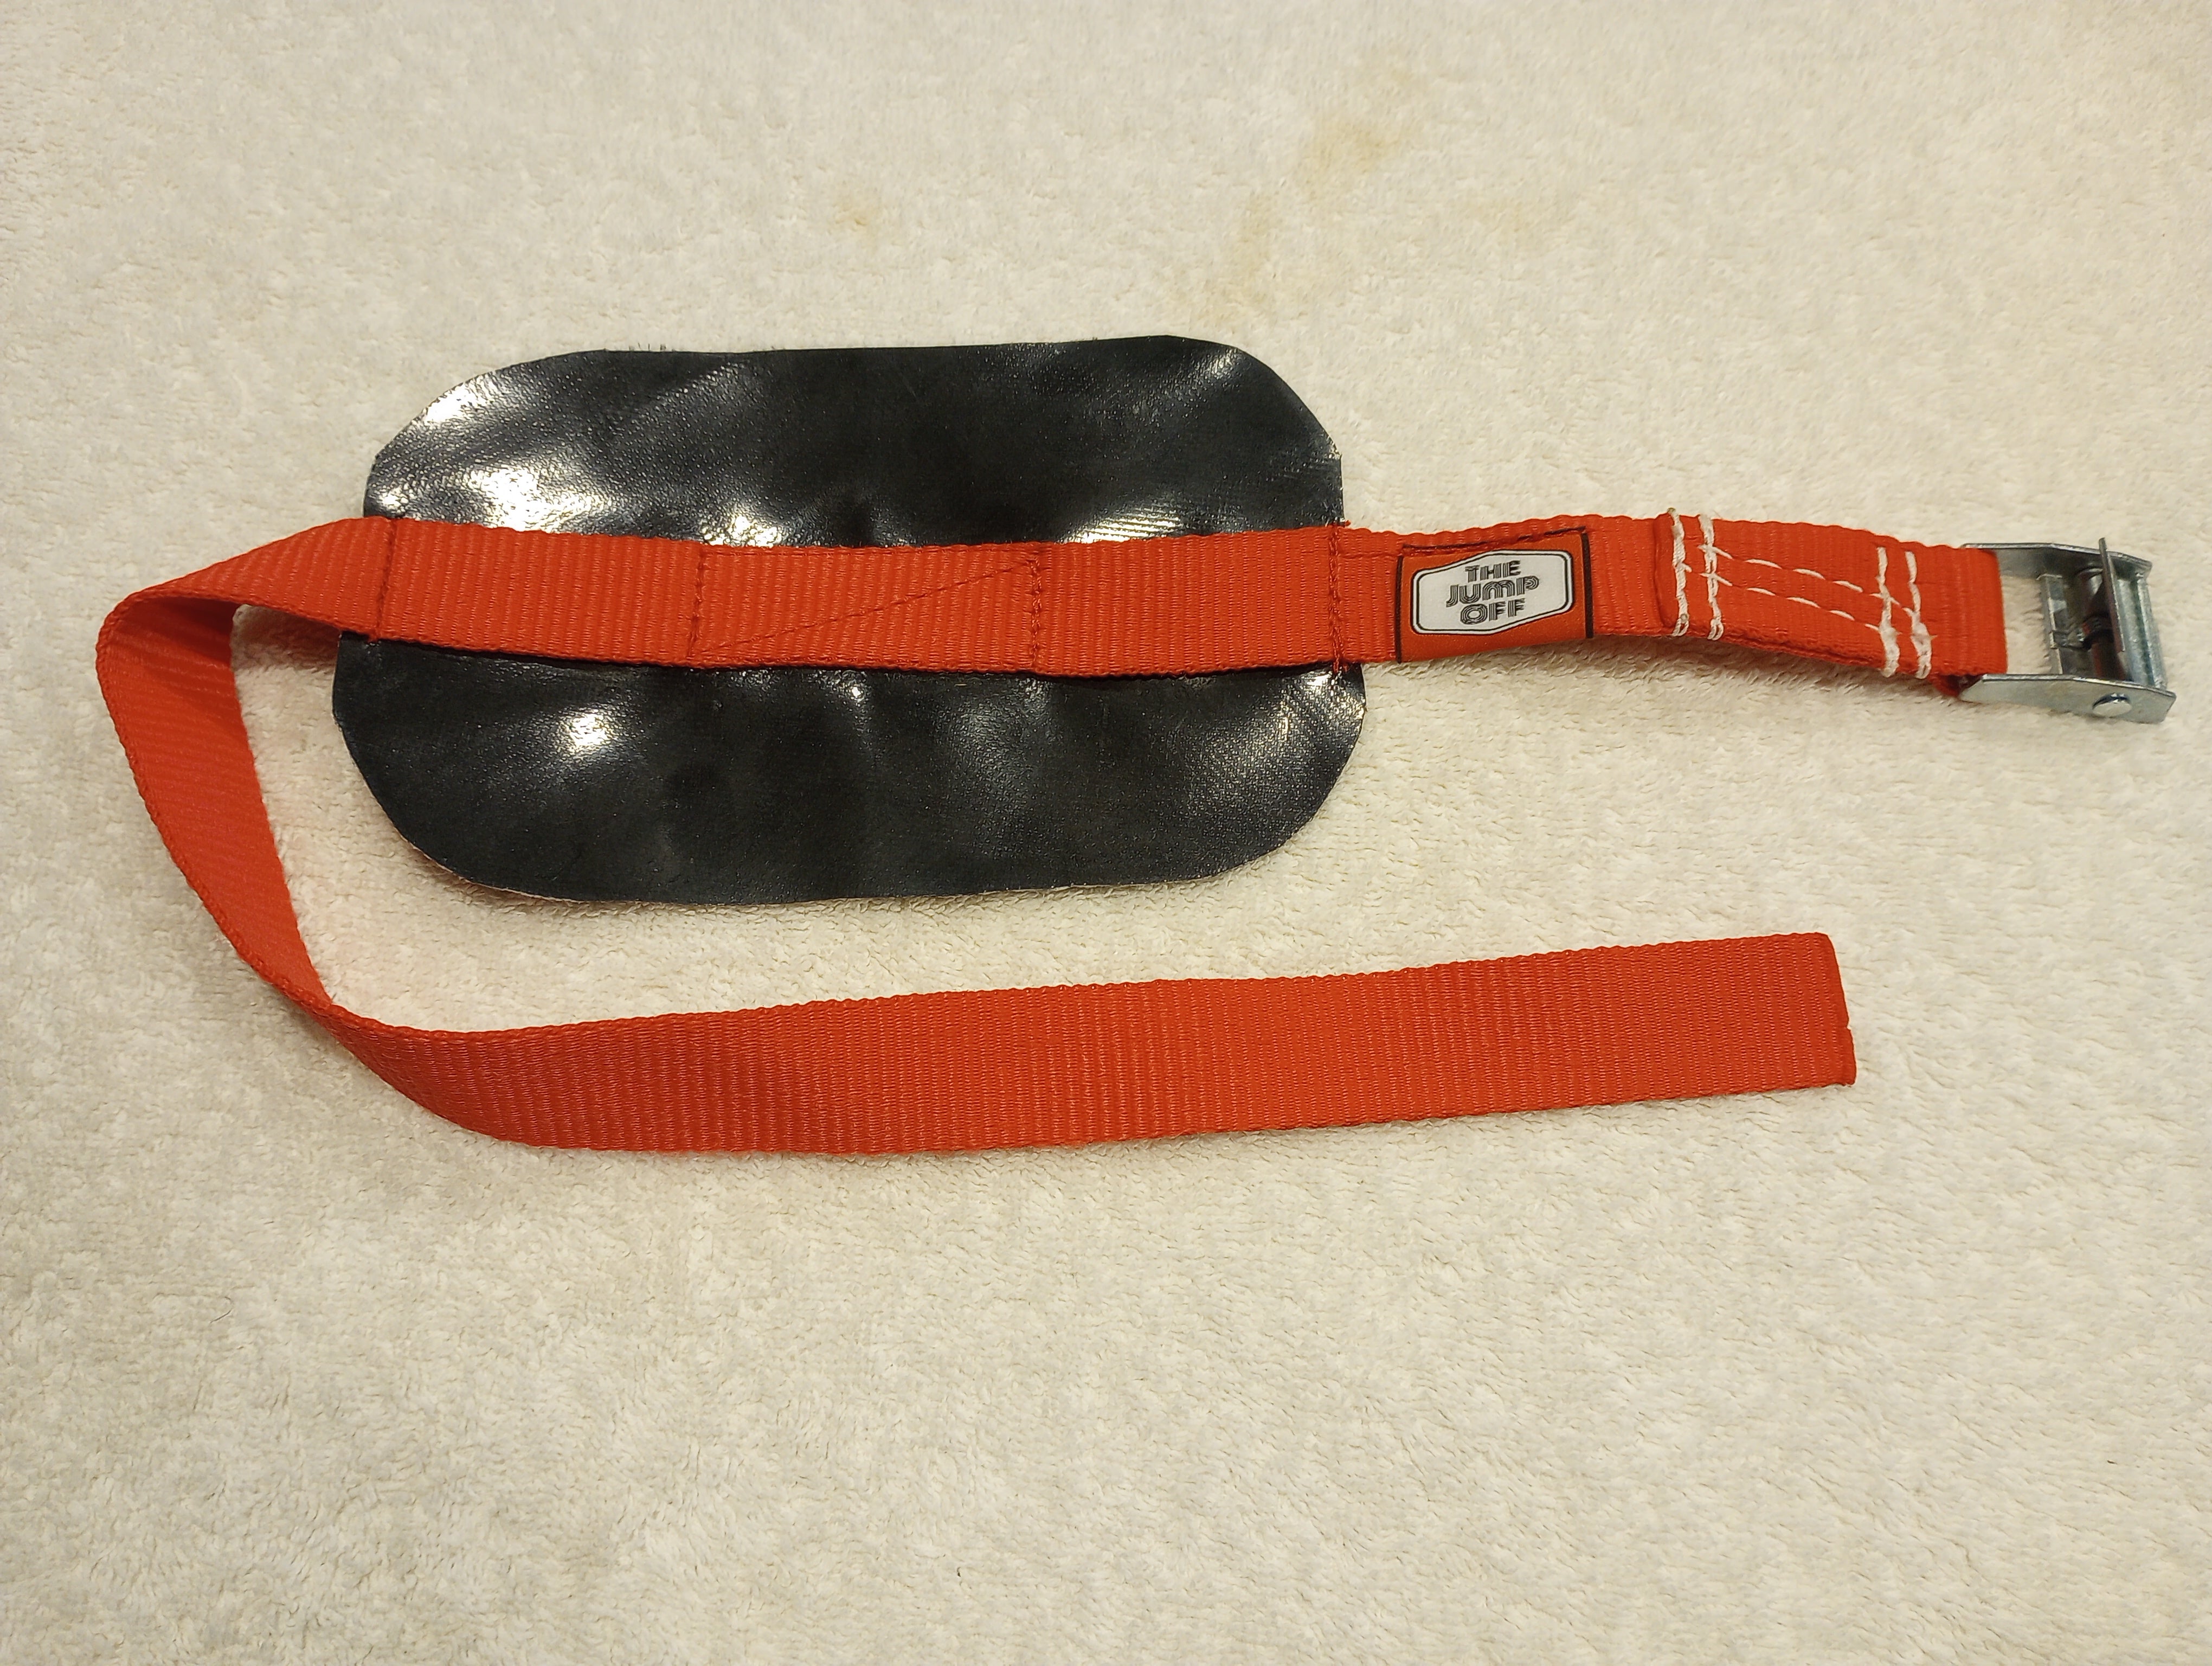 Blower Tube Strap - Vinyl oval 7” x 4.5”. Red 1” Strap 30” Long